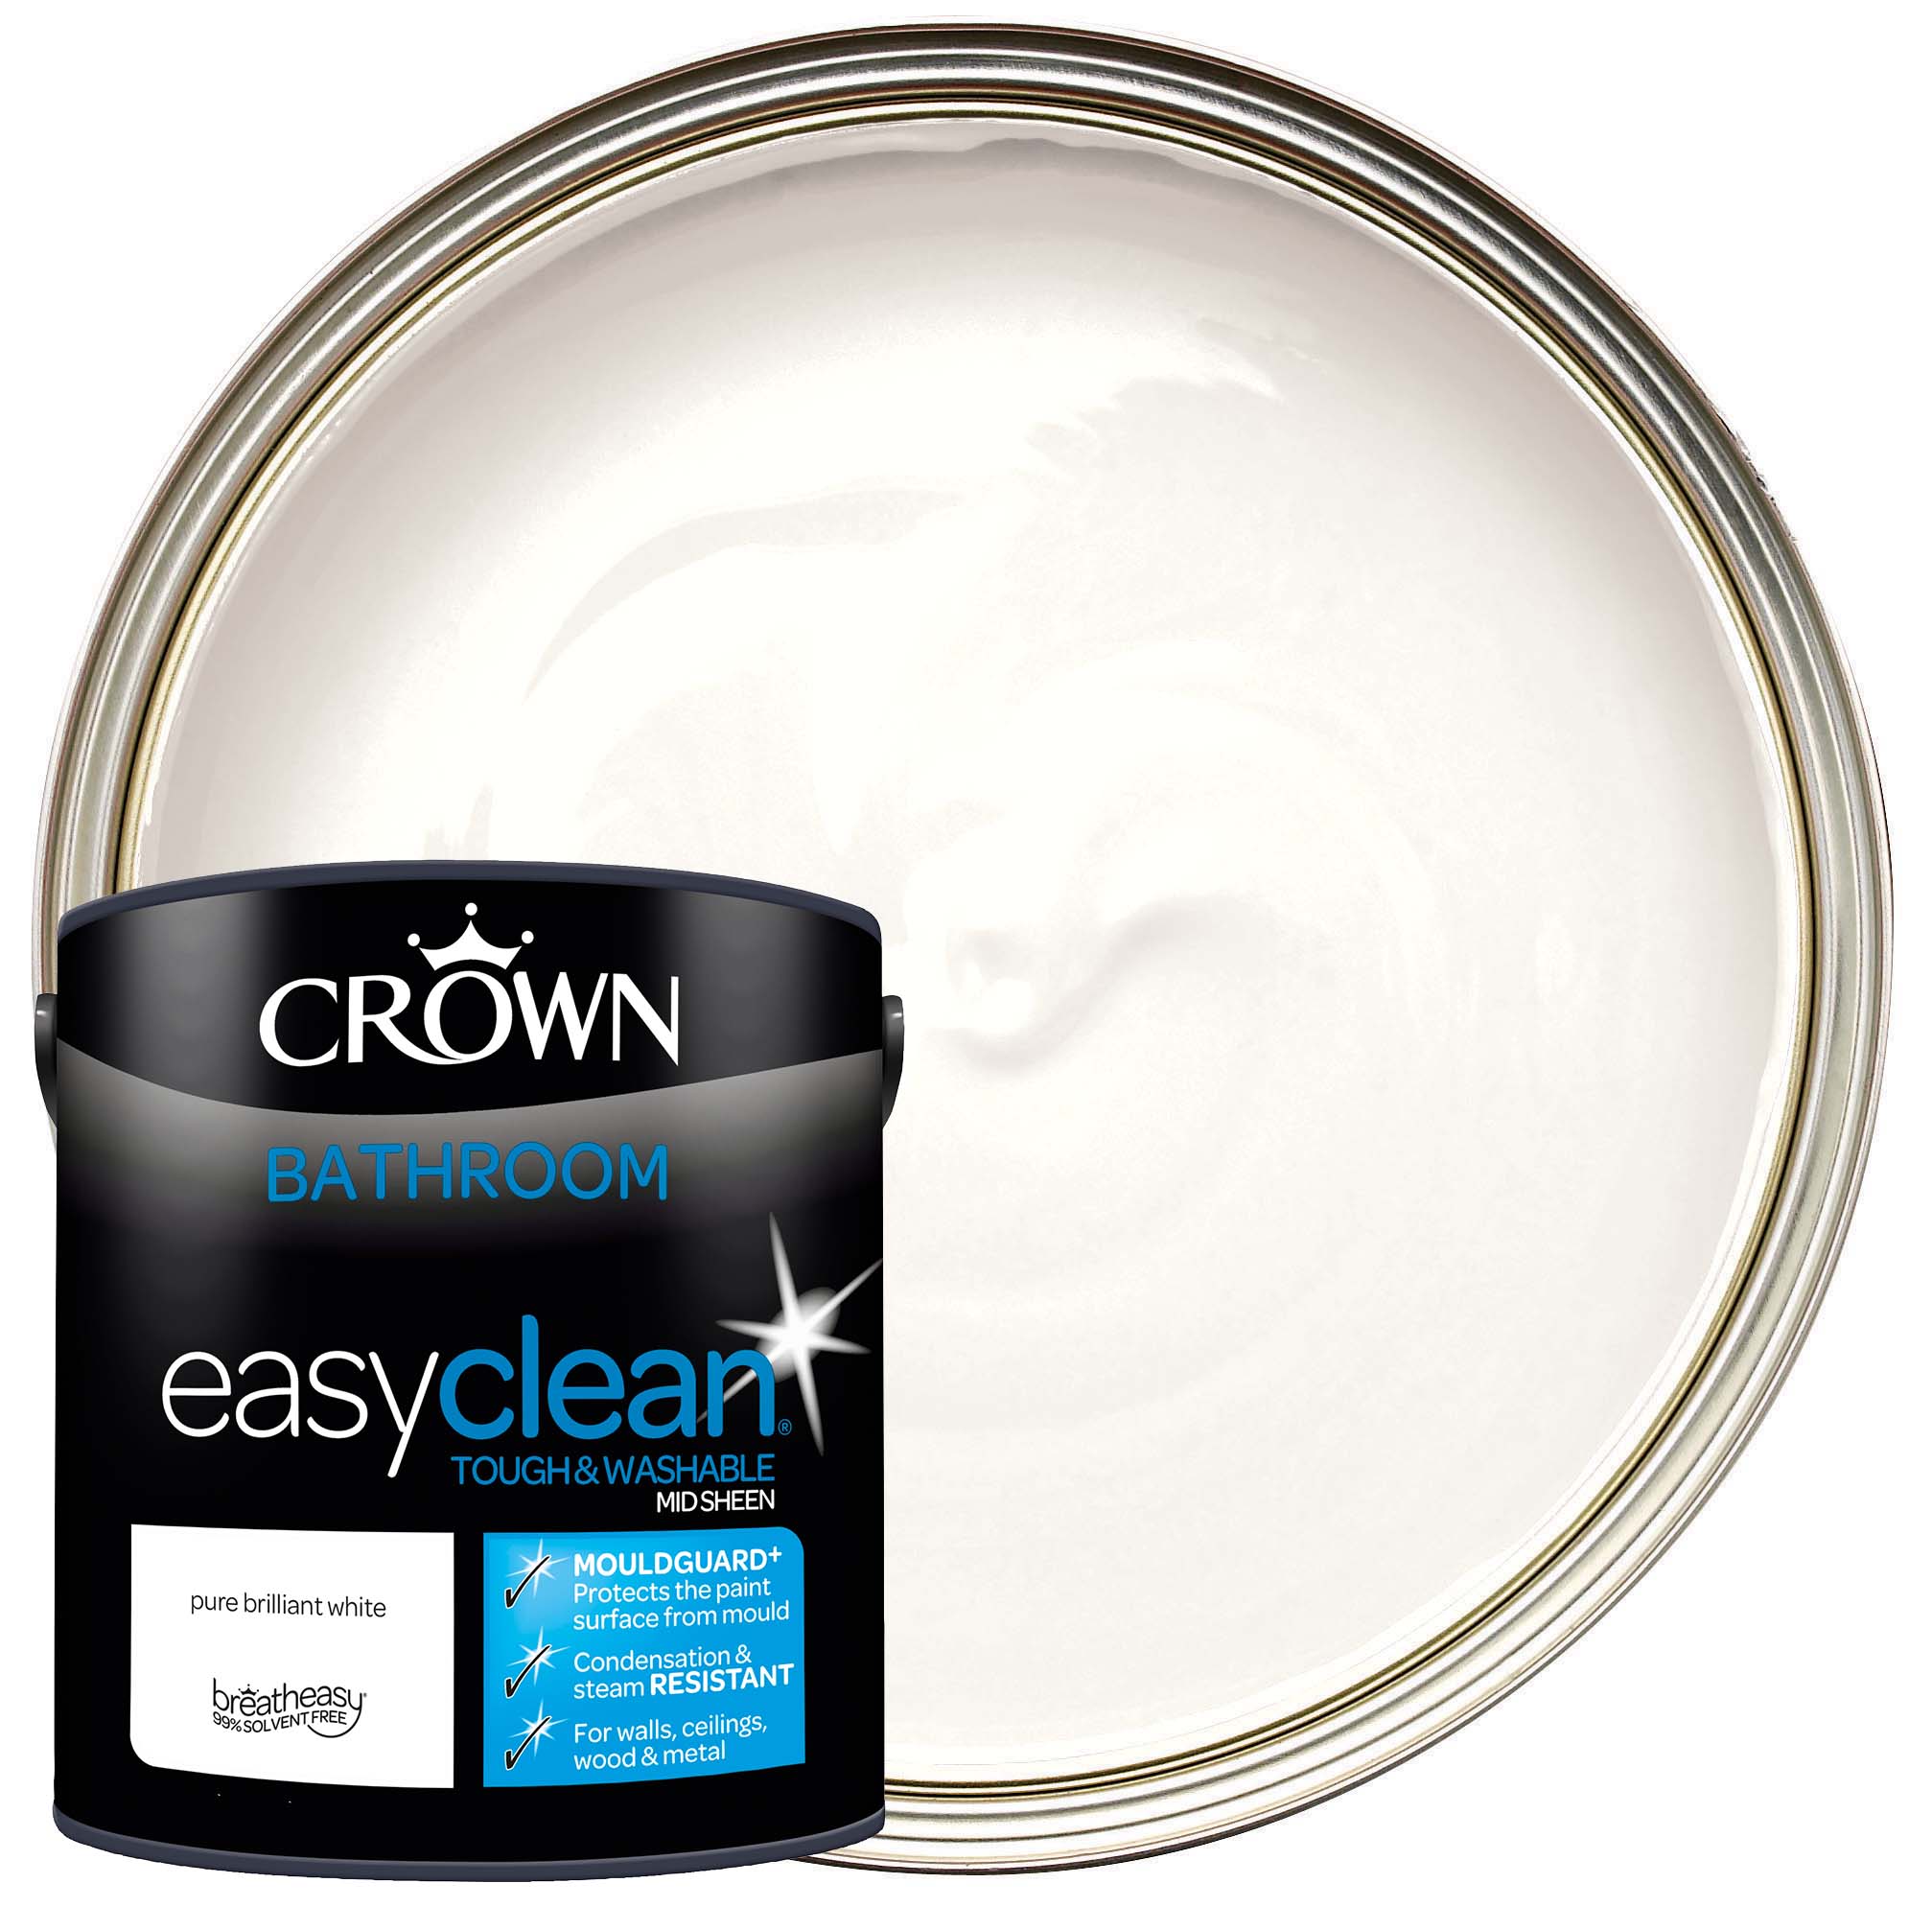 Image of Crown Easyclean Mid Sheen Emulsion Bathroom Paint - Brilliant White - 2.5L